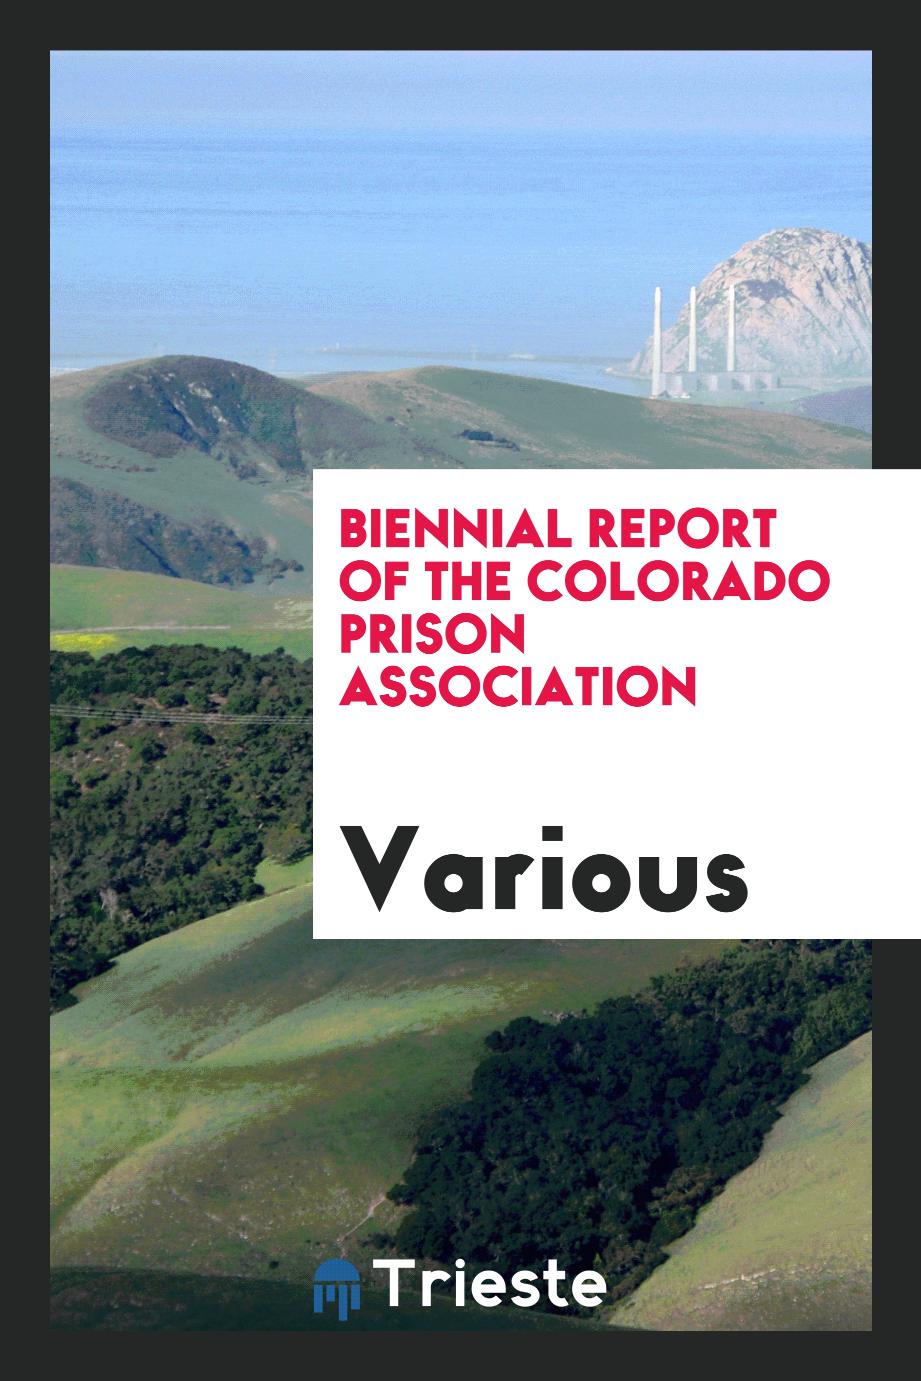 Biennial Report of the Colorado Prison Association